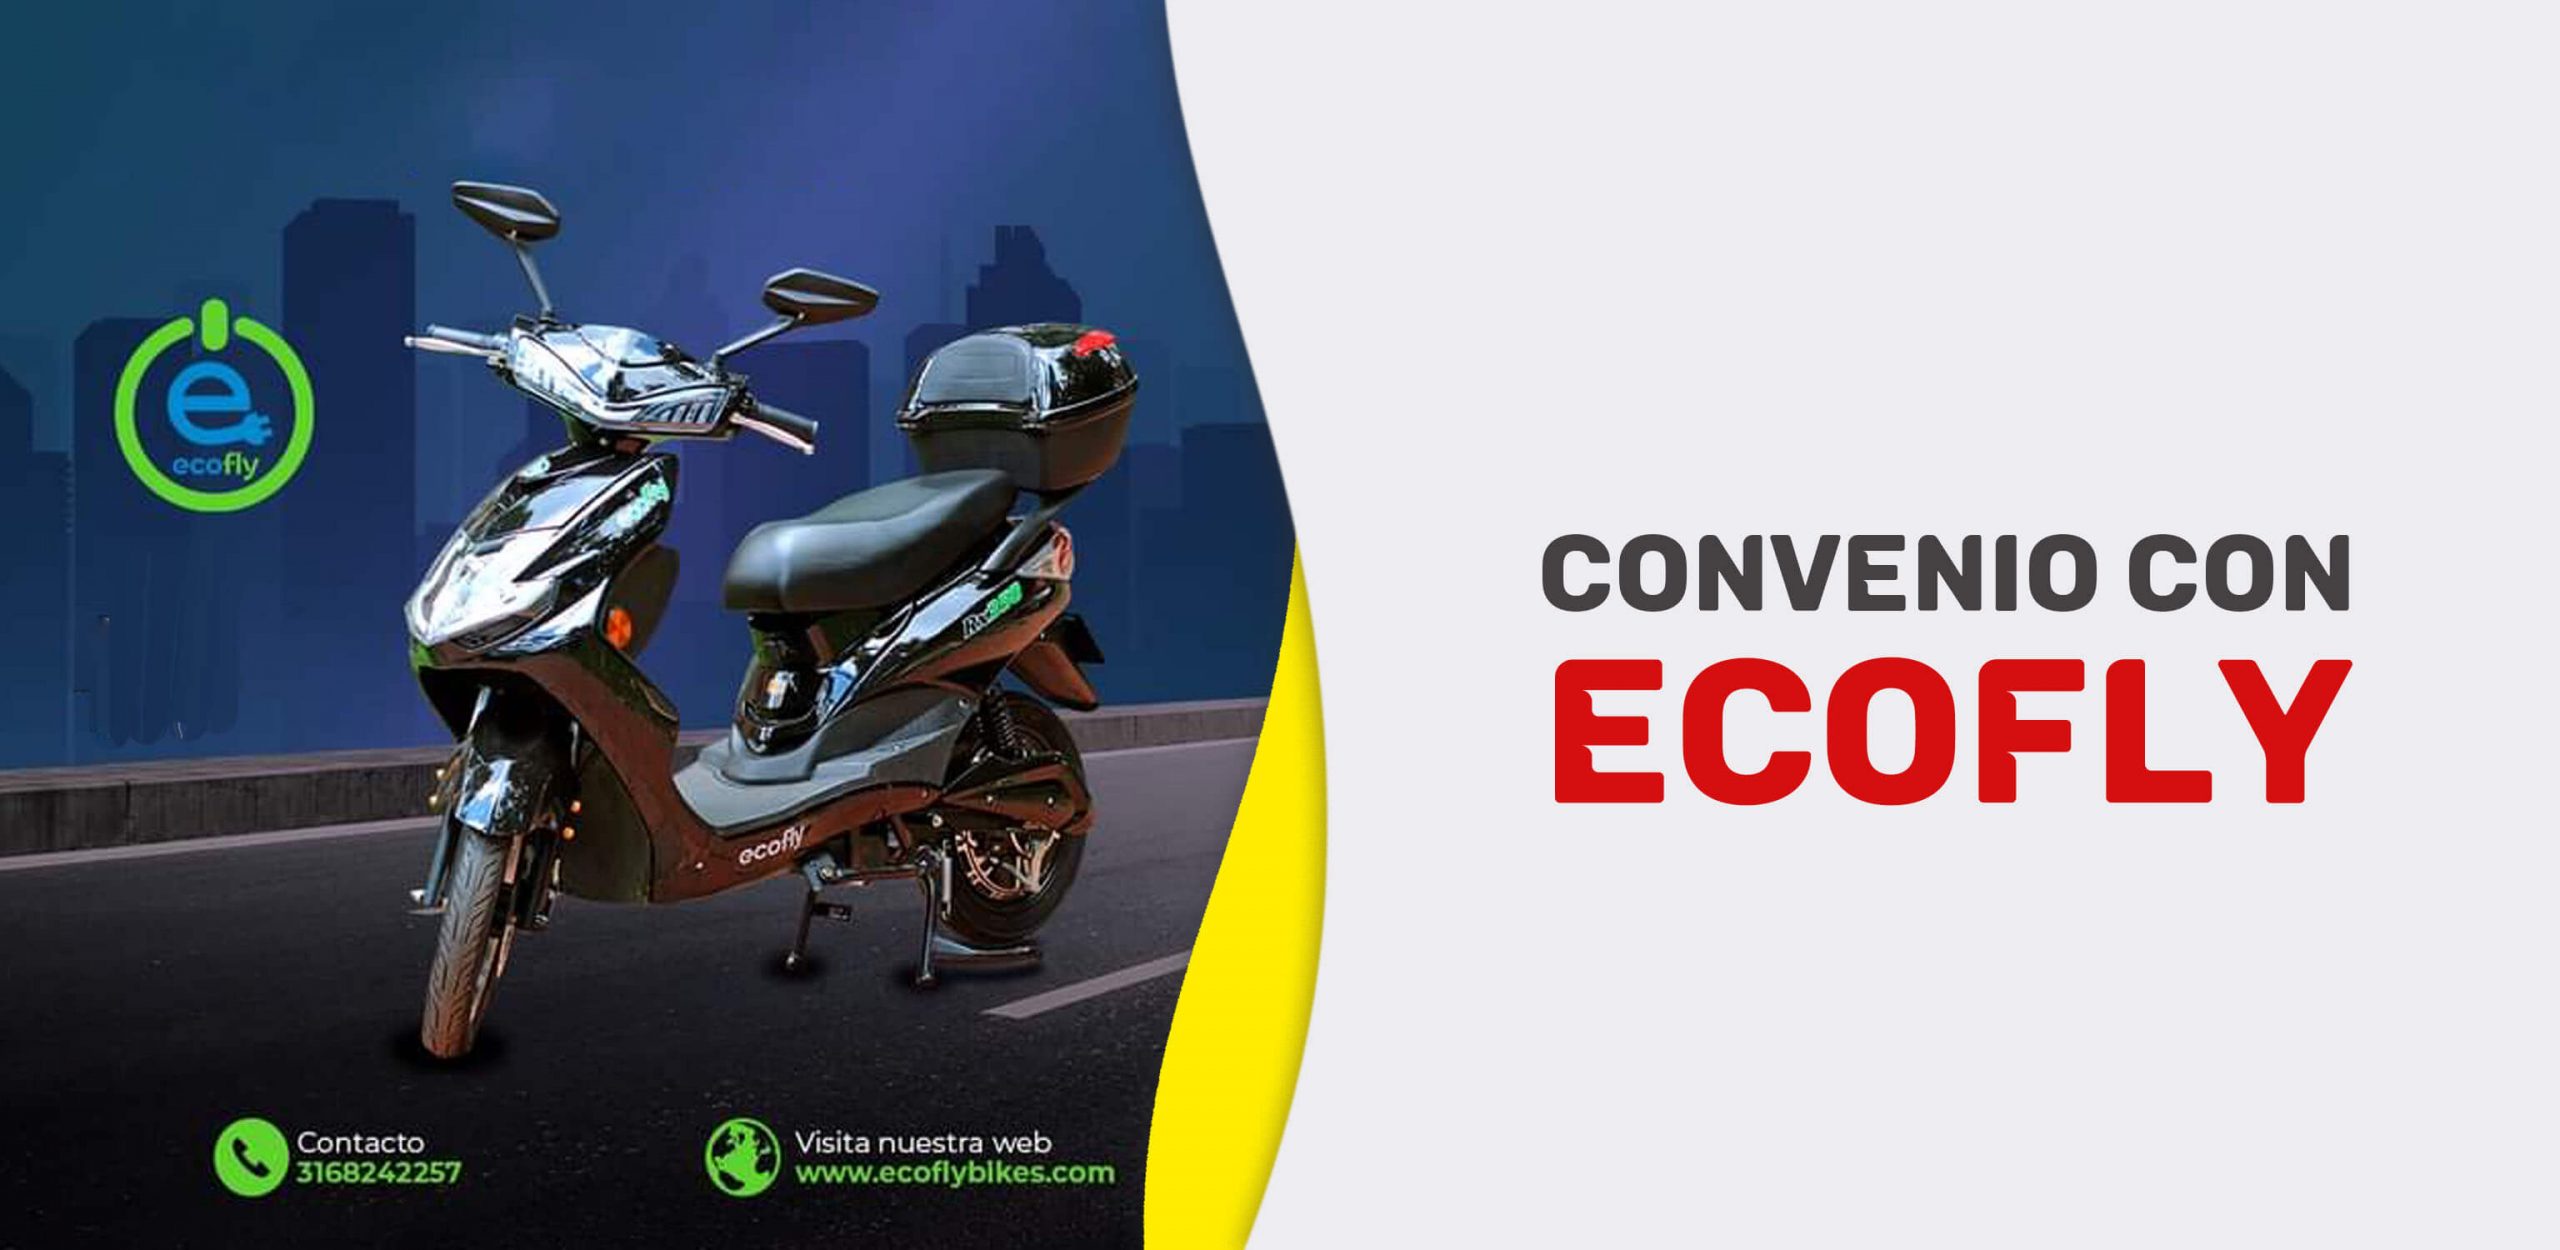 Convenio EcoFly